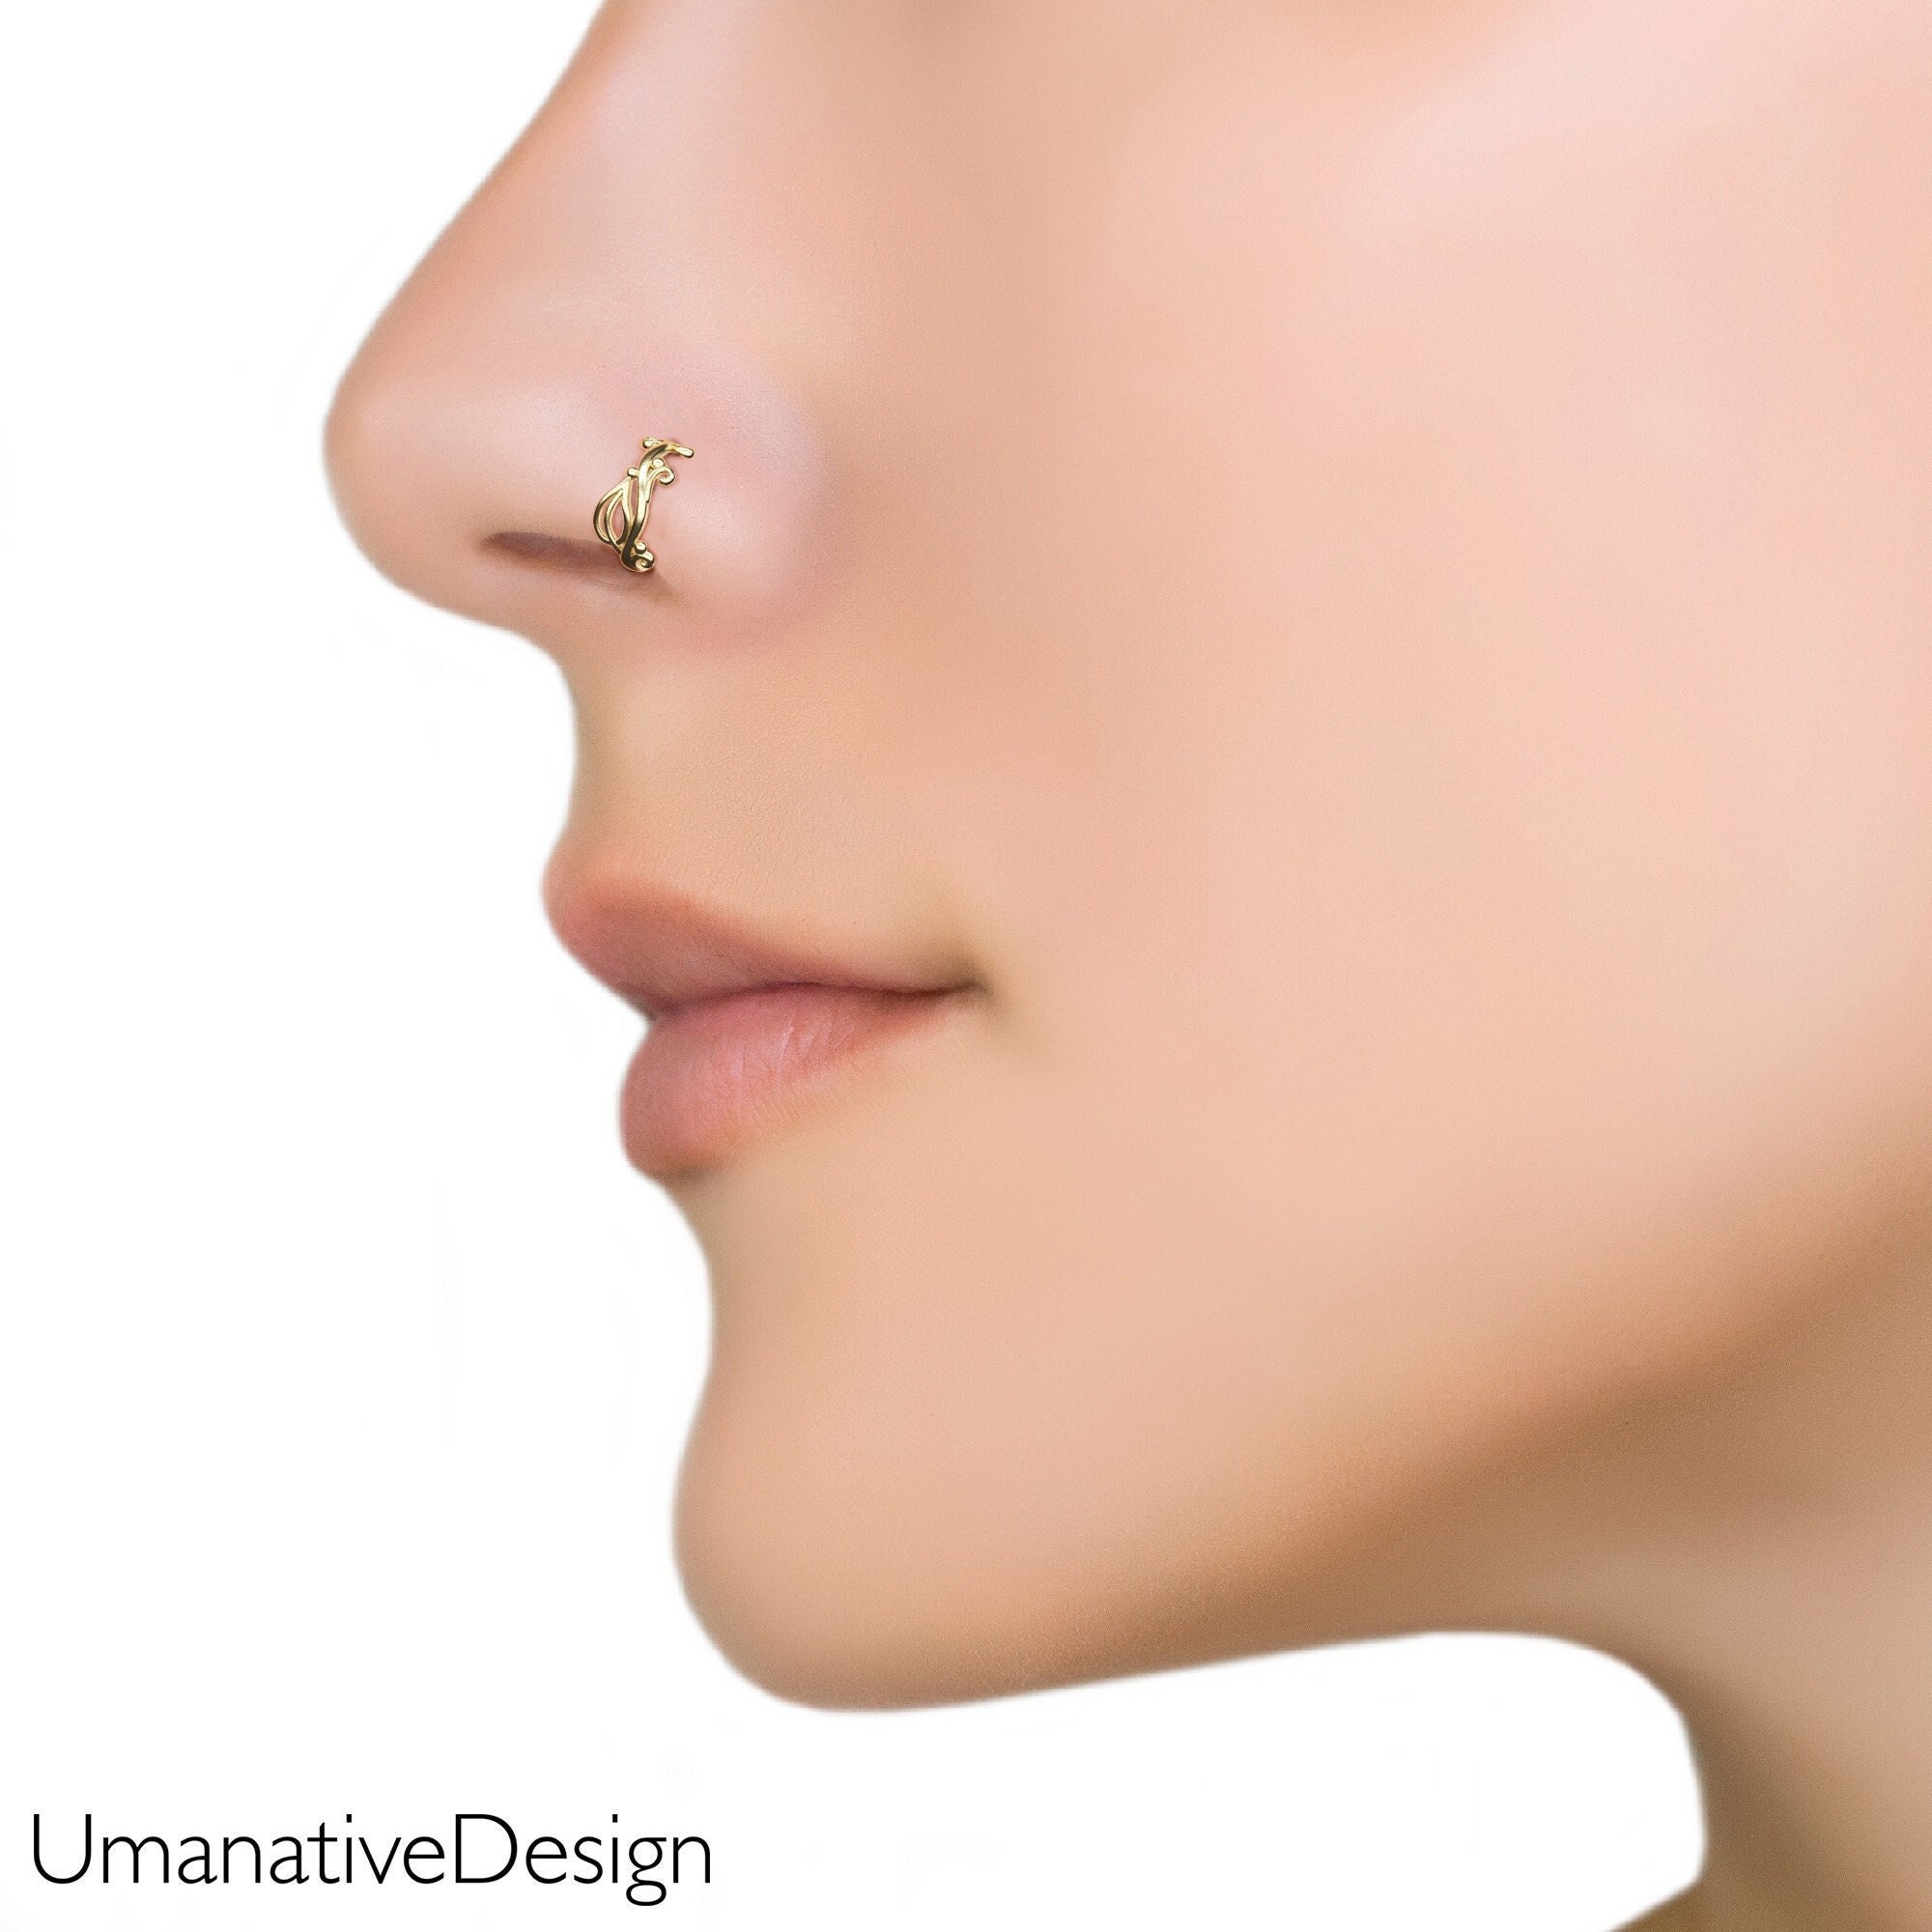 Pin by Kinomi on I ♥ Jewelry | Nose ring jewelry, Nose jewelry, Fancy  jewelry necklace